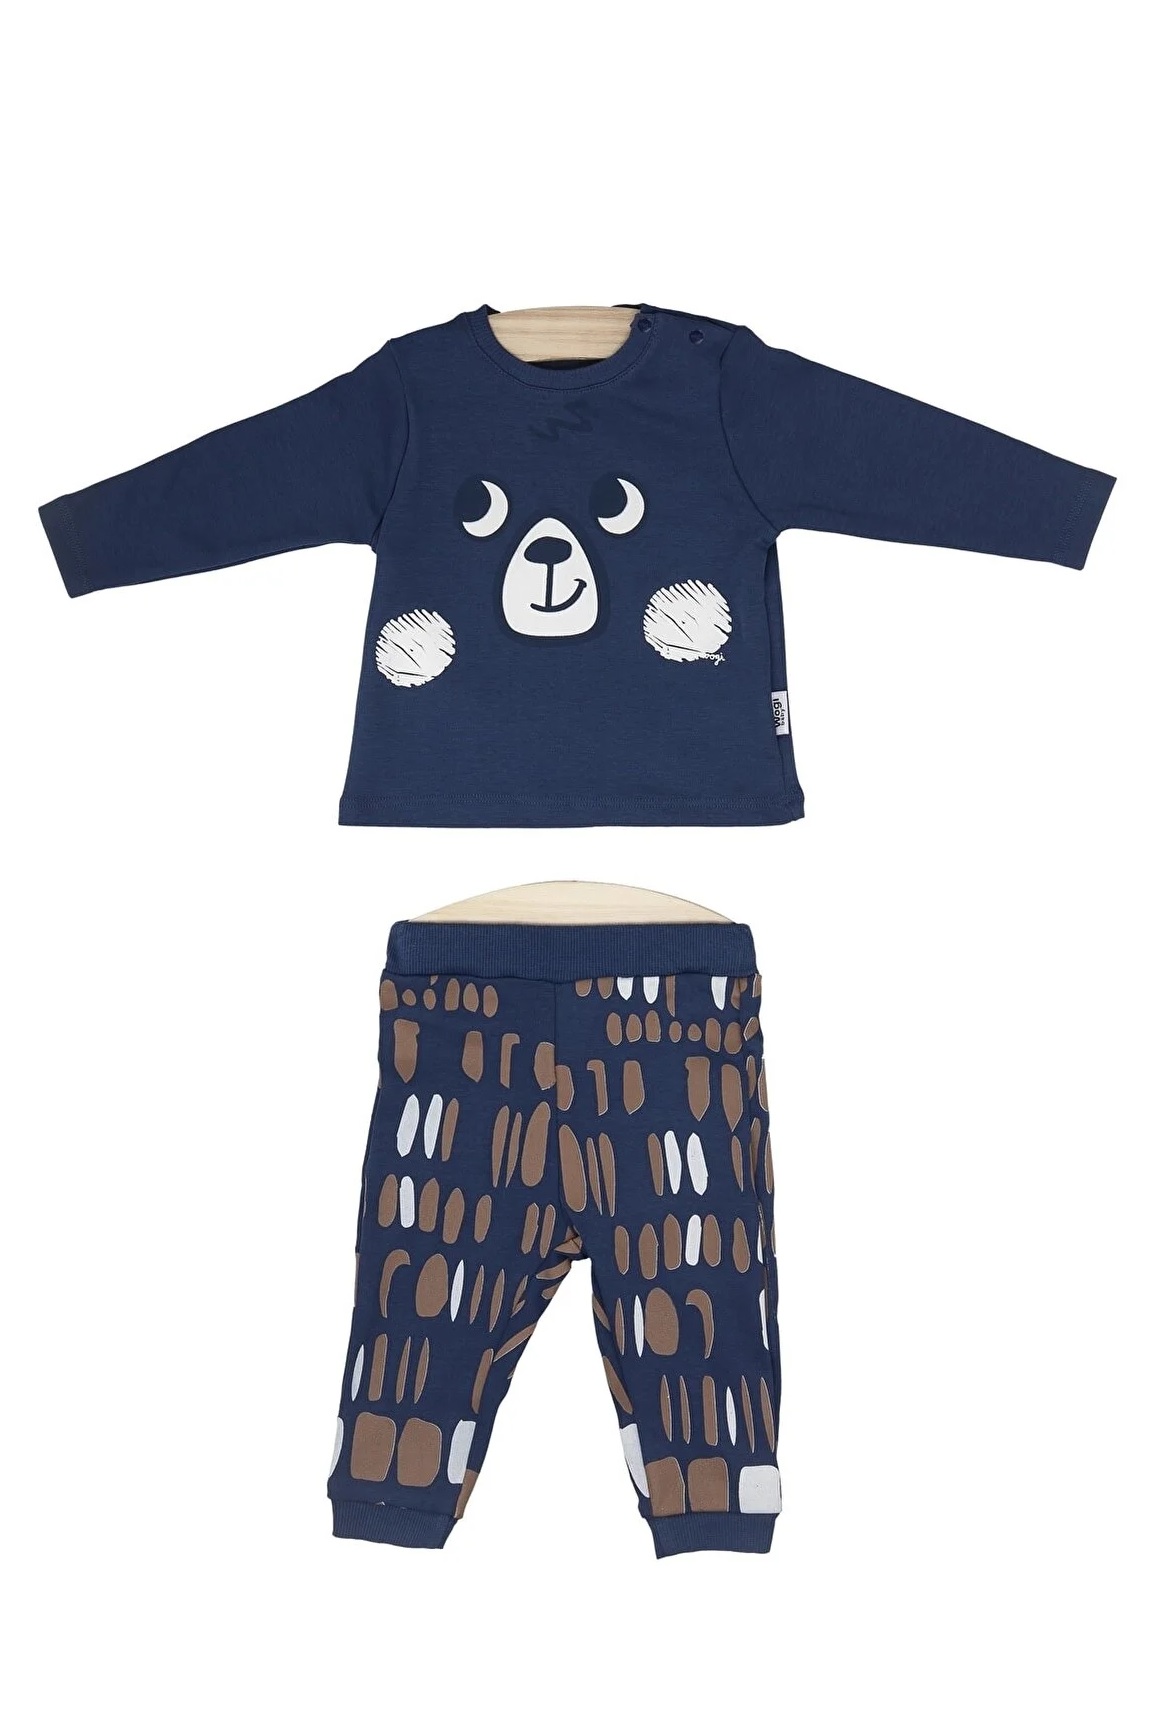 Wogi boy/baby pieces sleepwear set